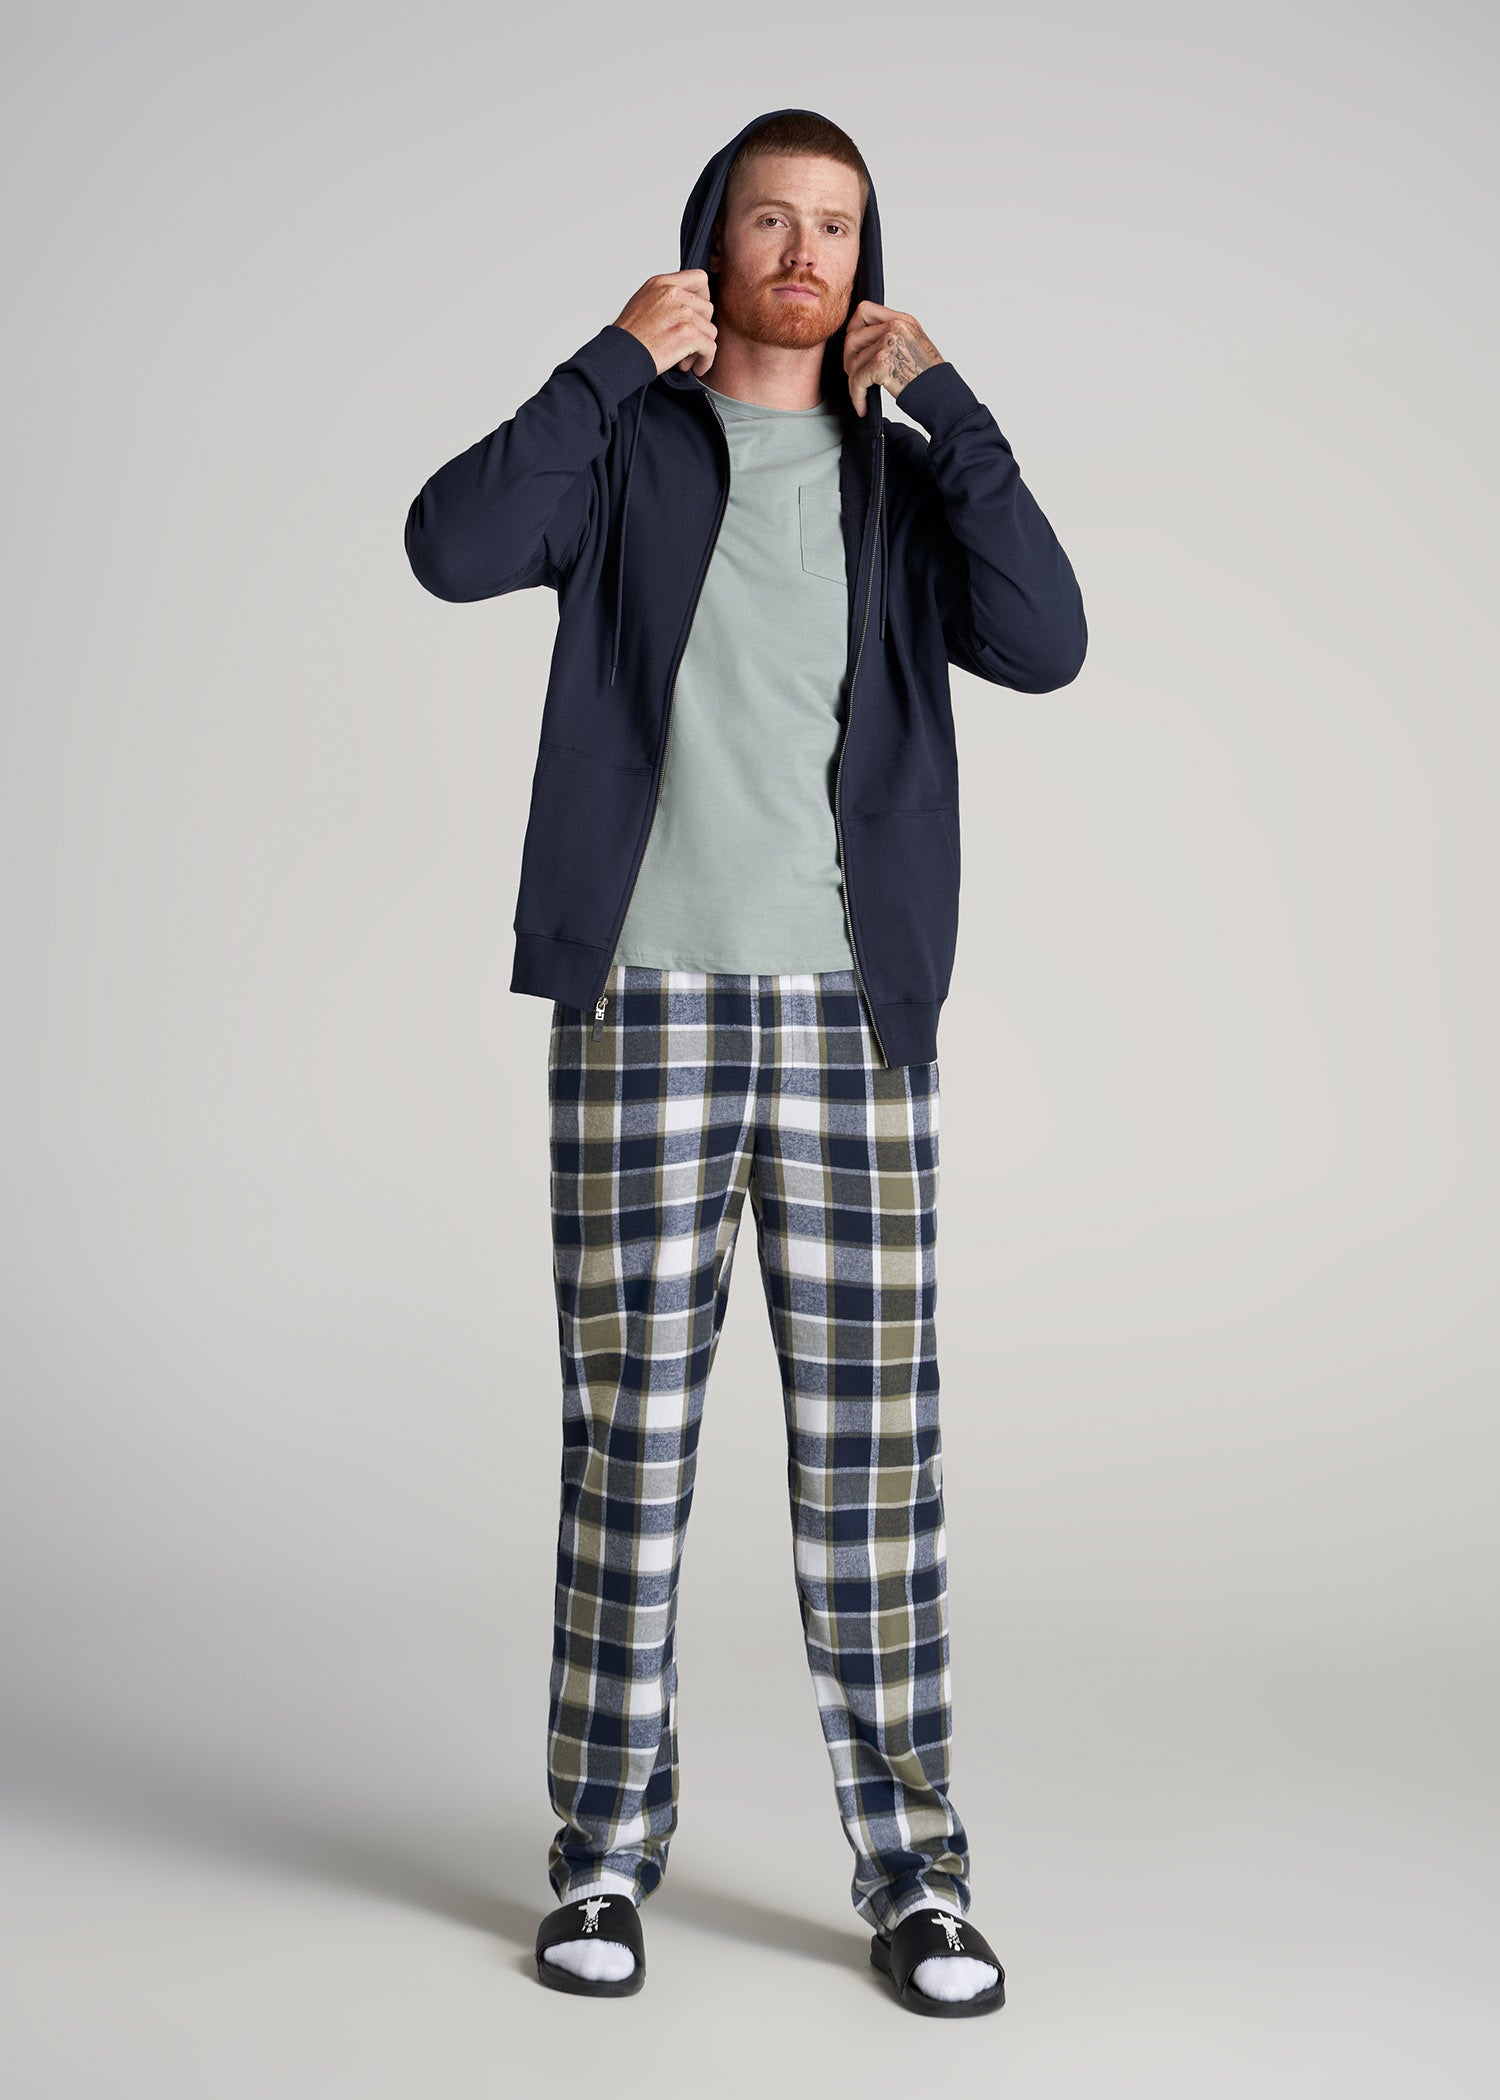 Men's Green Gingham Classic Flannel Pajamas